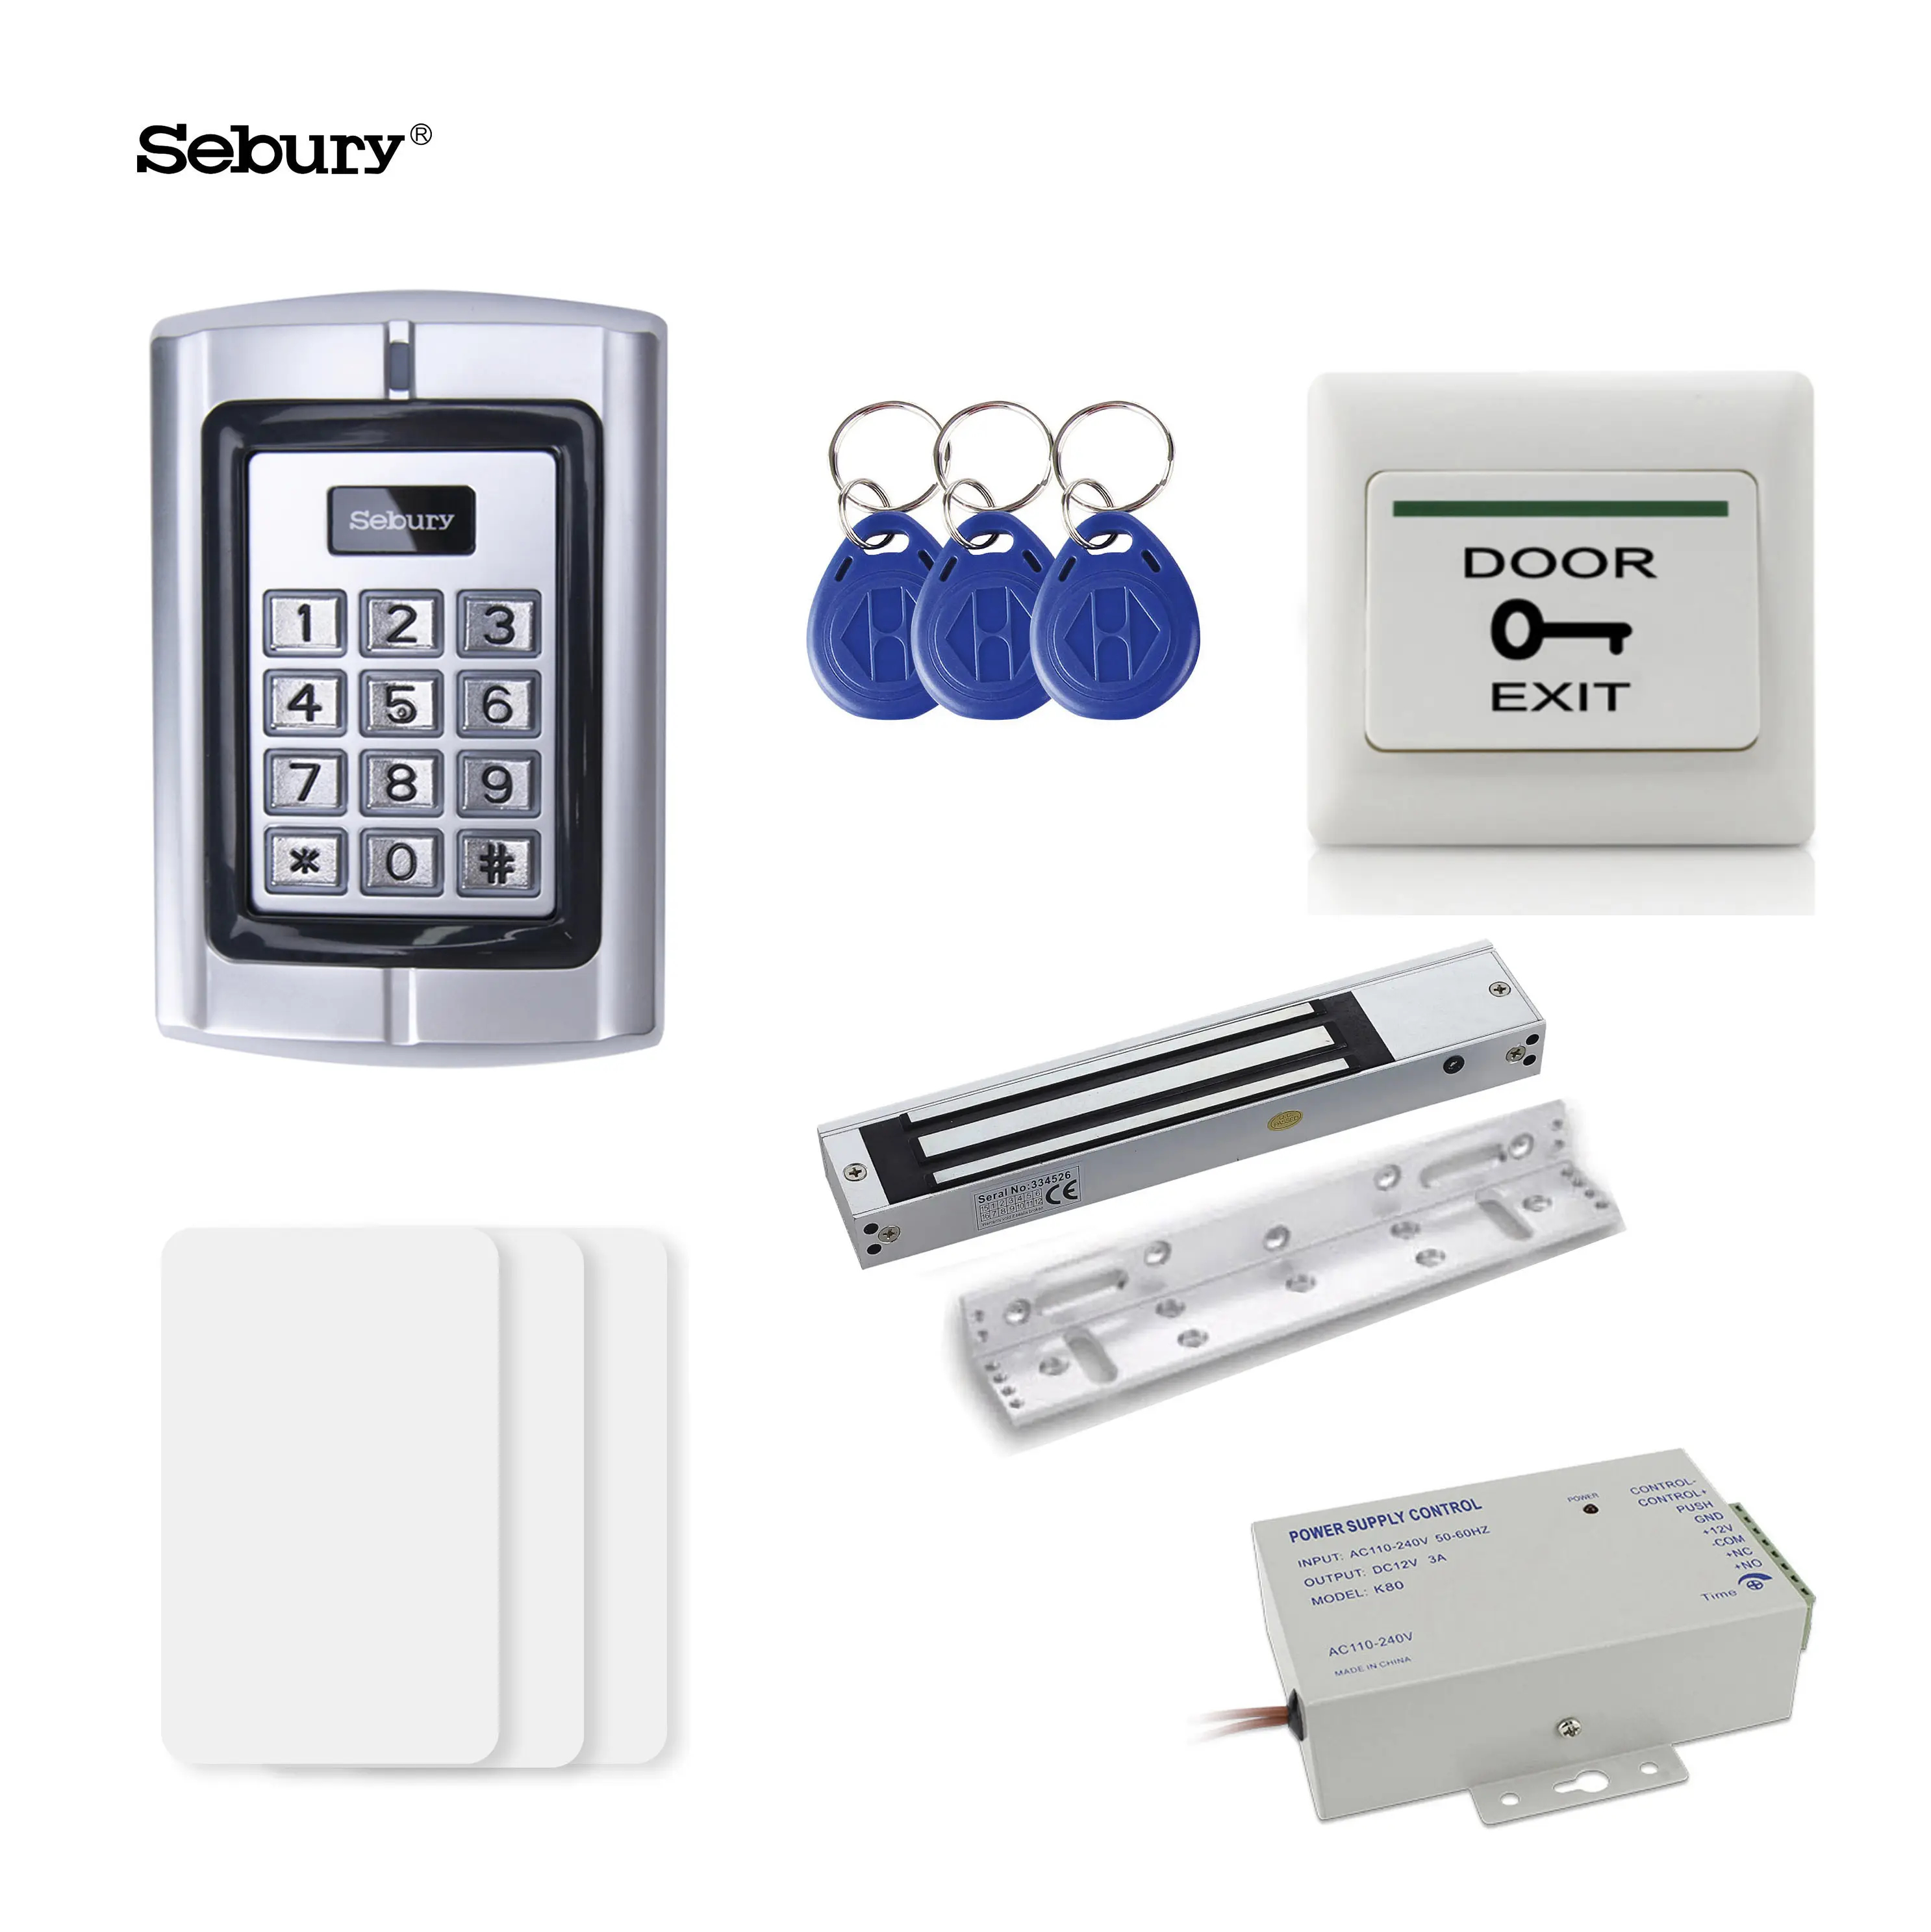 Sebury Hot Sale Full Set of RFID 125khz Door Access Control System+Power Supply+Magnetic Lock+Door Exit Button+Key Fob+Key Card